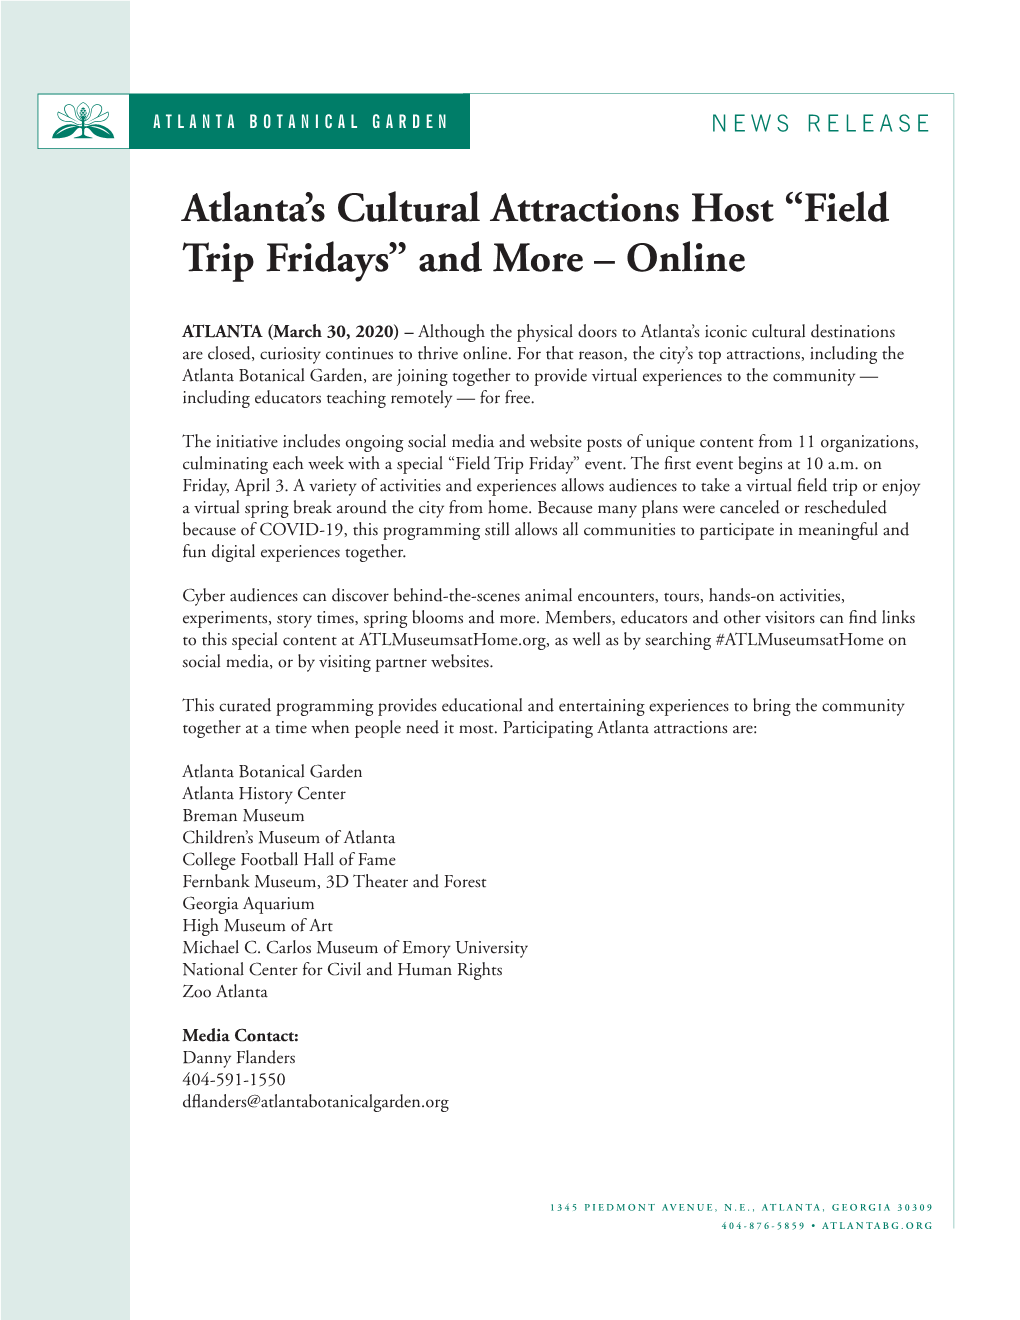 Atlanta's Cultural Attractions Host “Field Trip Fridays”